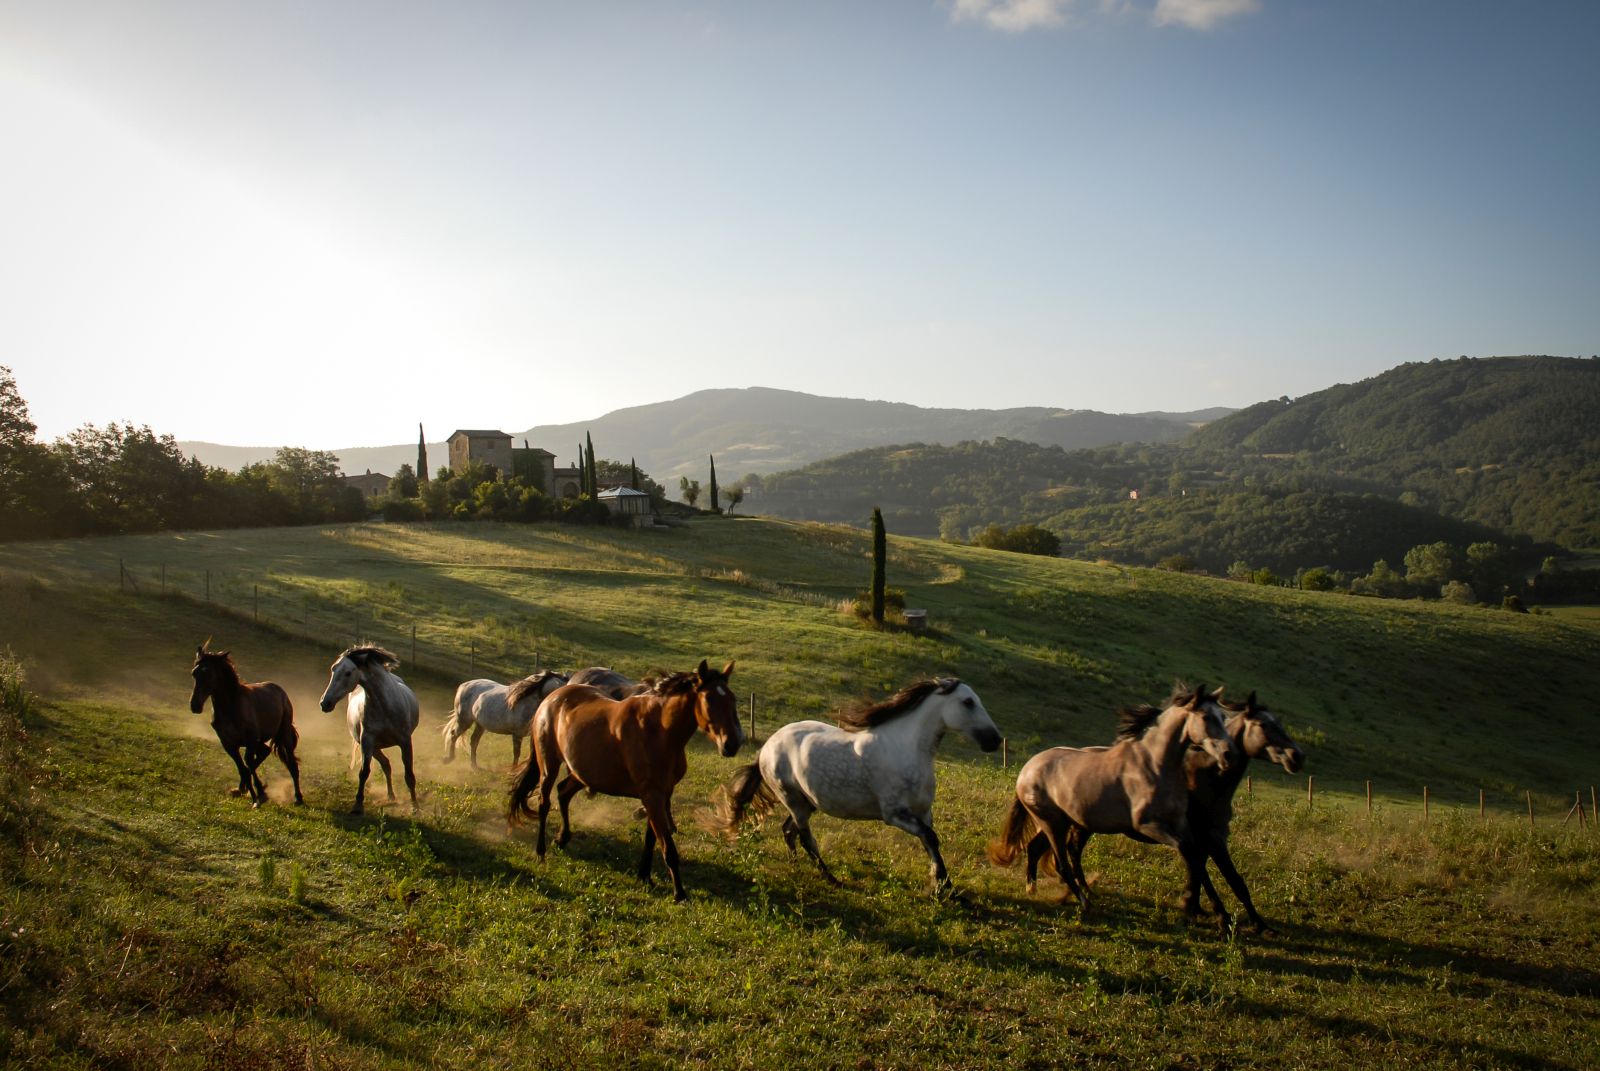 Horses galloping through the grounds of the Castello di Reschio estate in Umbria Italy